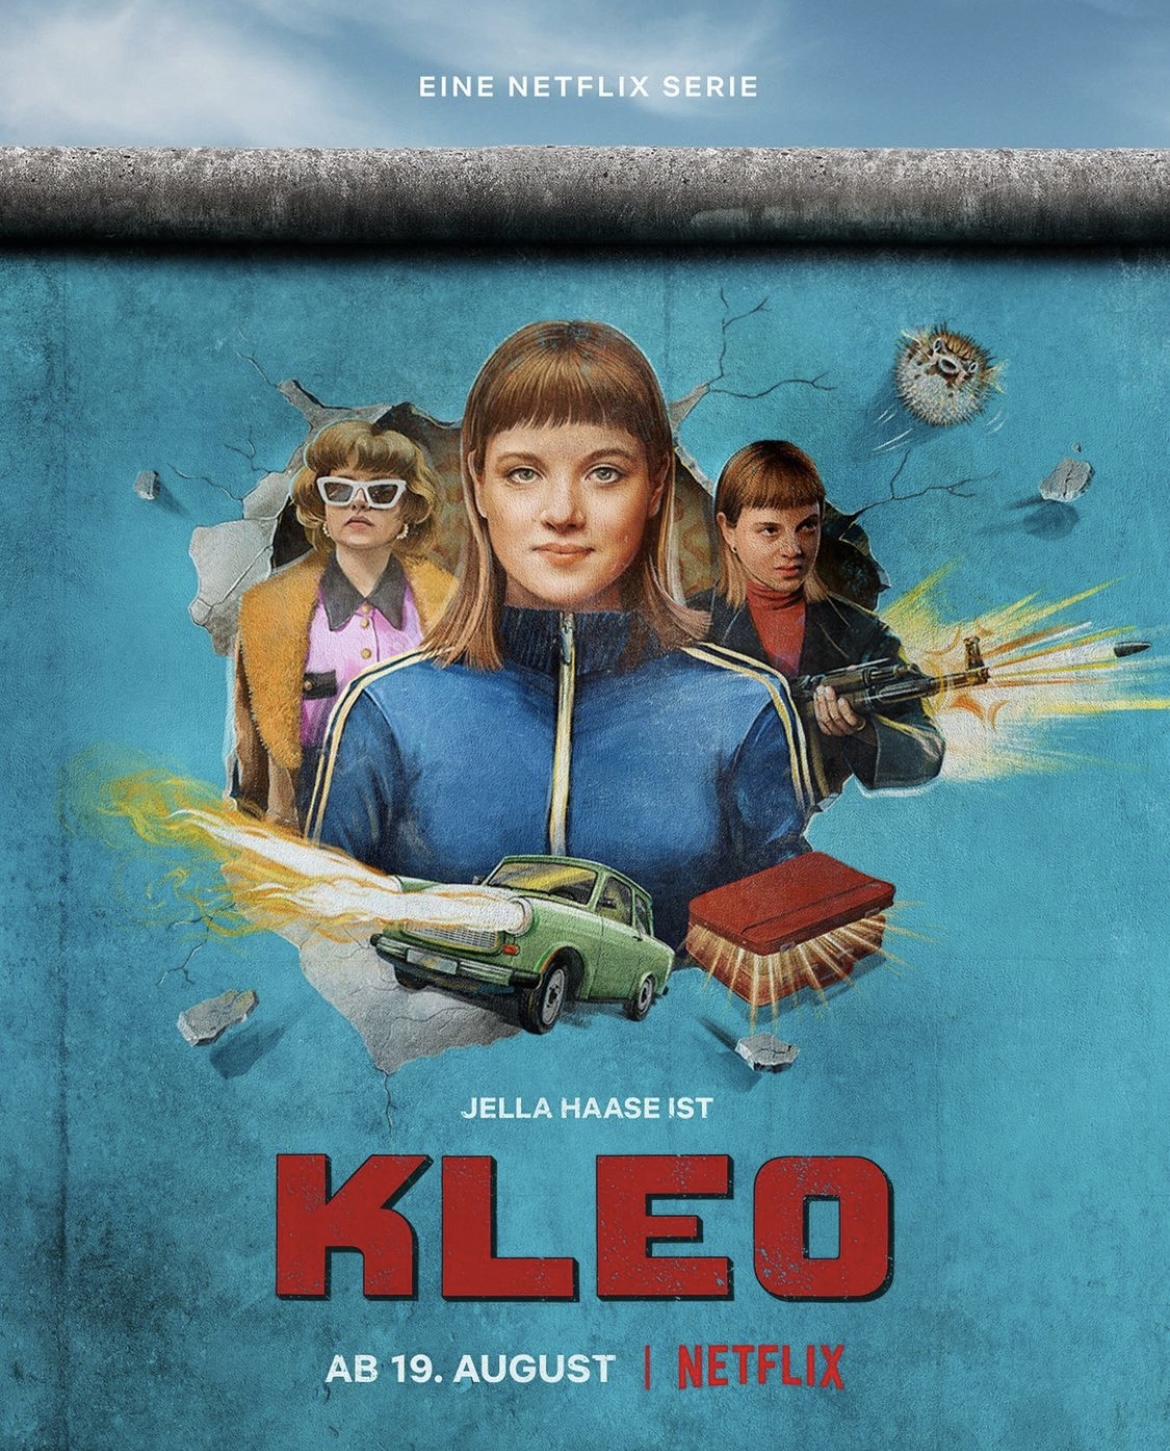 Is Kleo (2022)on Netflix